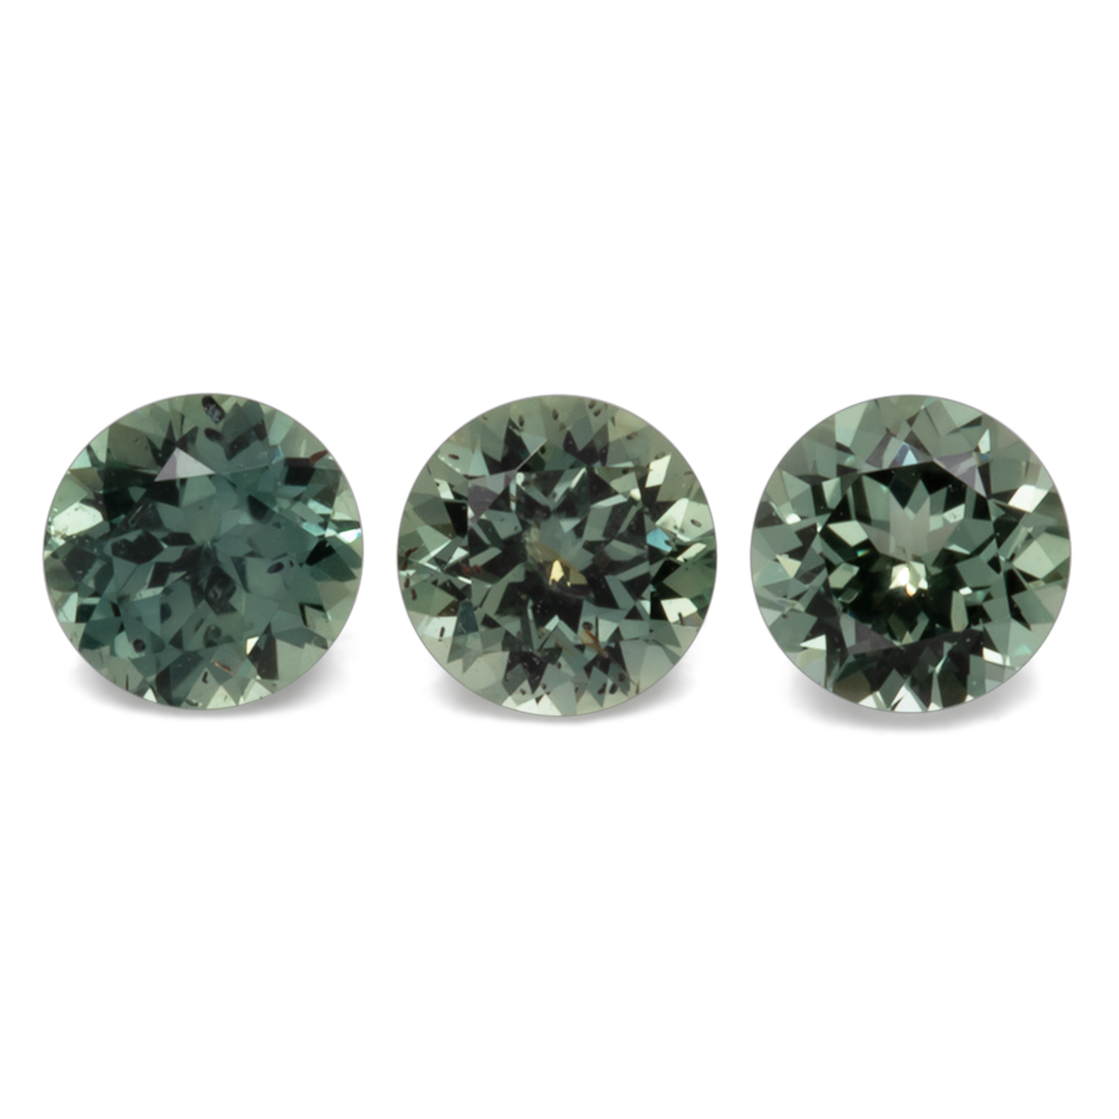 Saphir Set - blau/grün/grau, rund, 4x4 mm, 0,98 cts, Nr. XSR11198